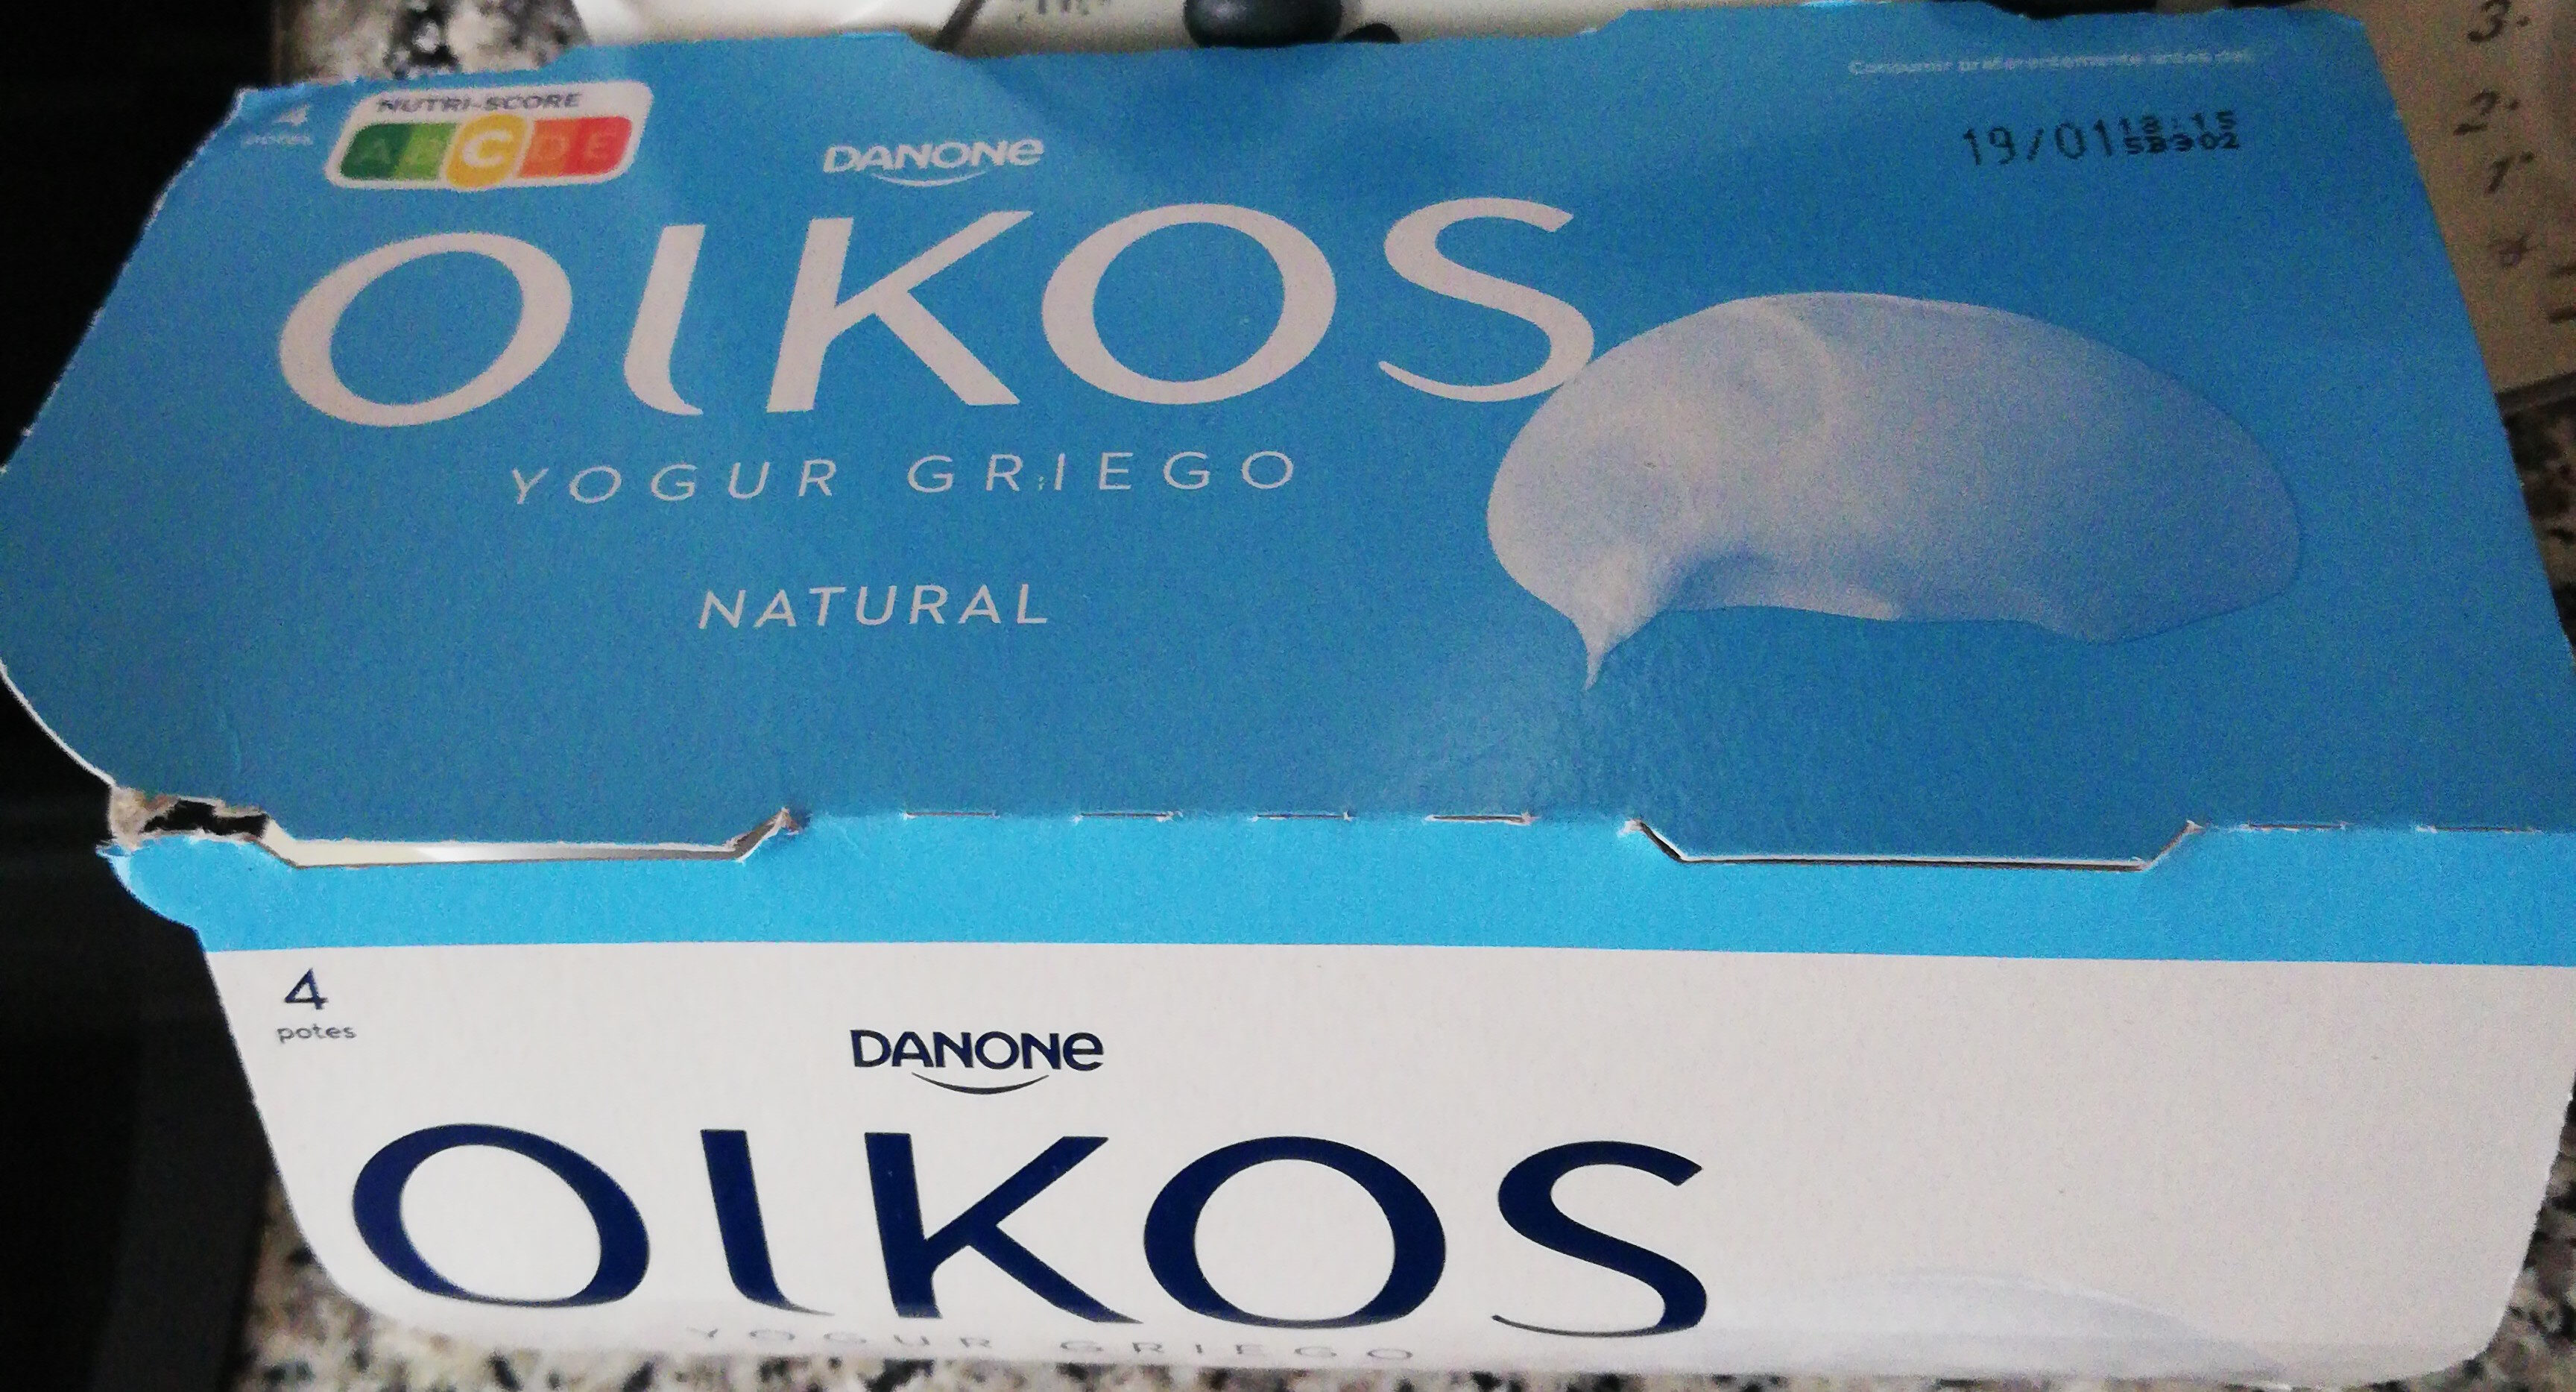 Oikos yogur griego natural - Produktua - es